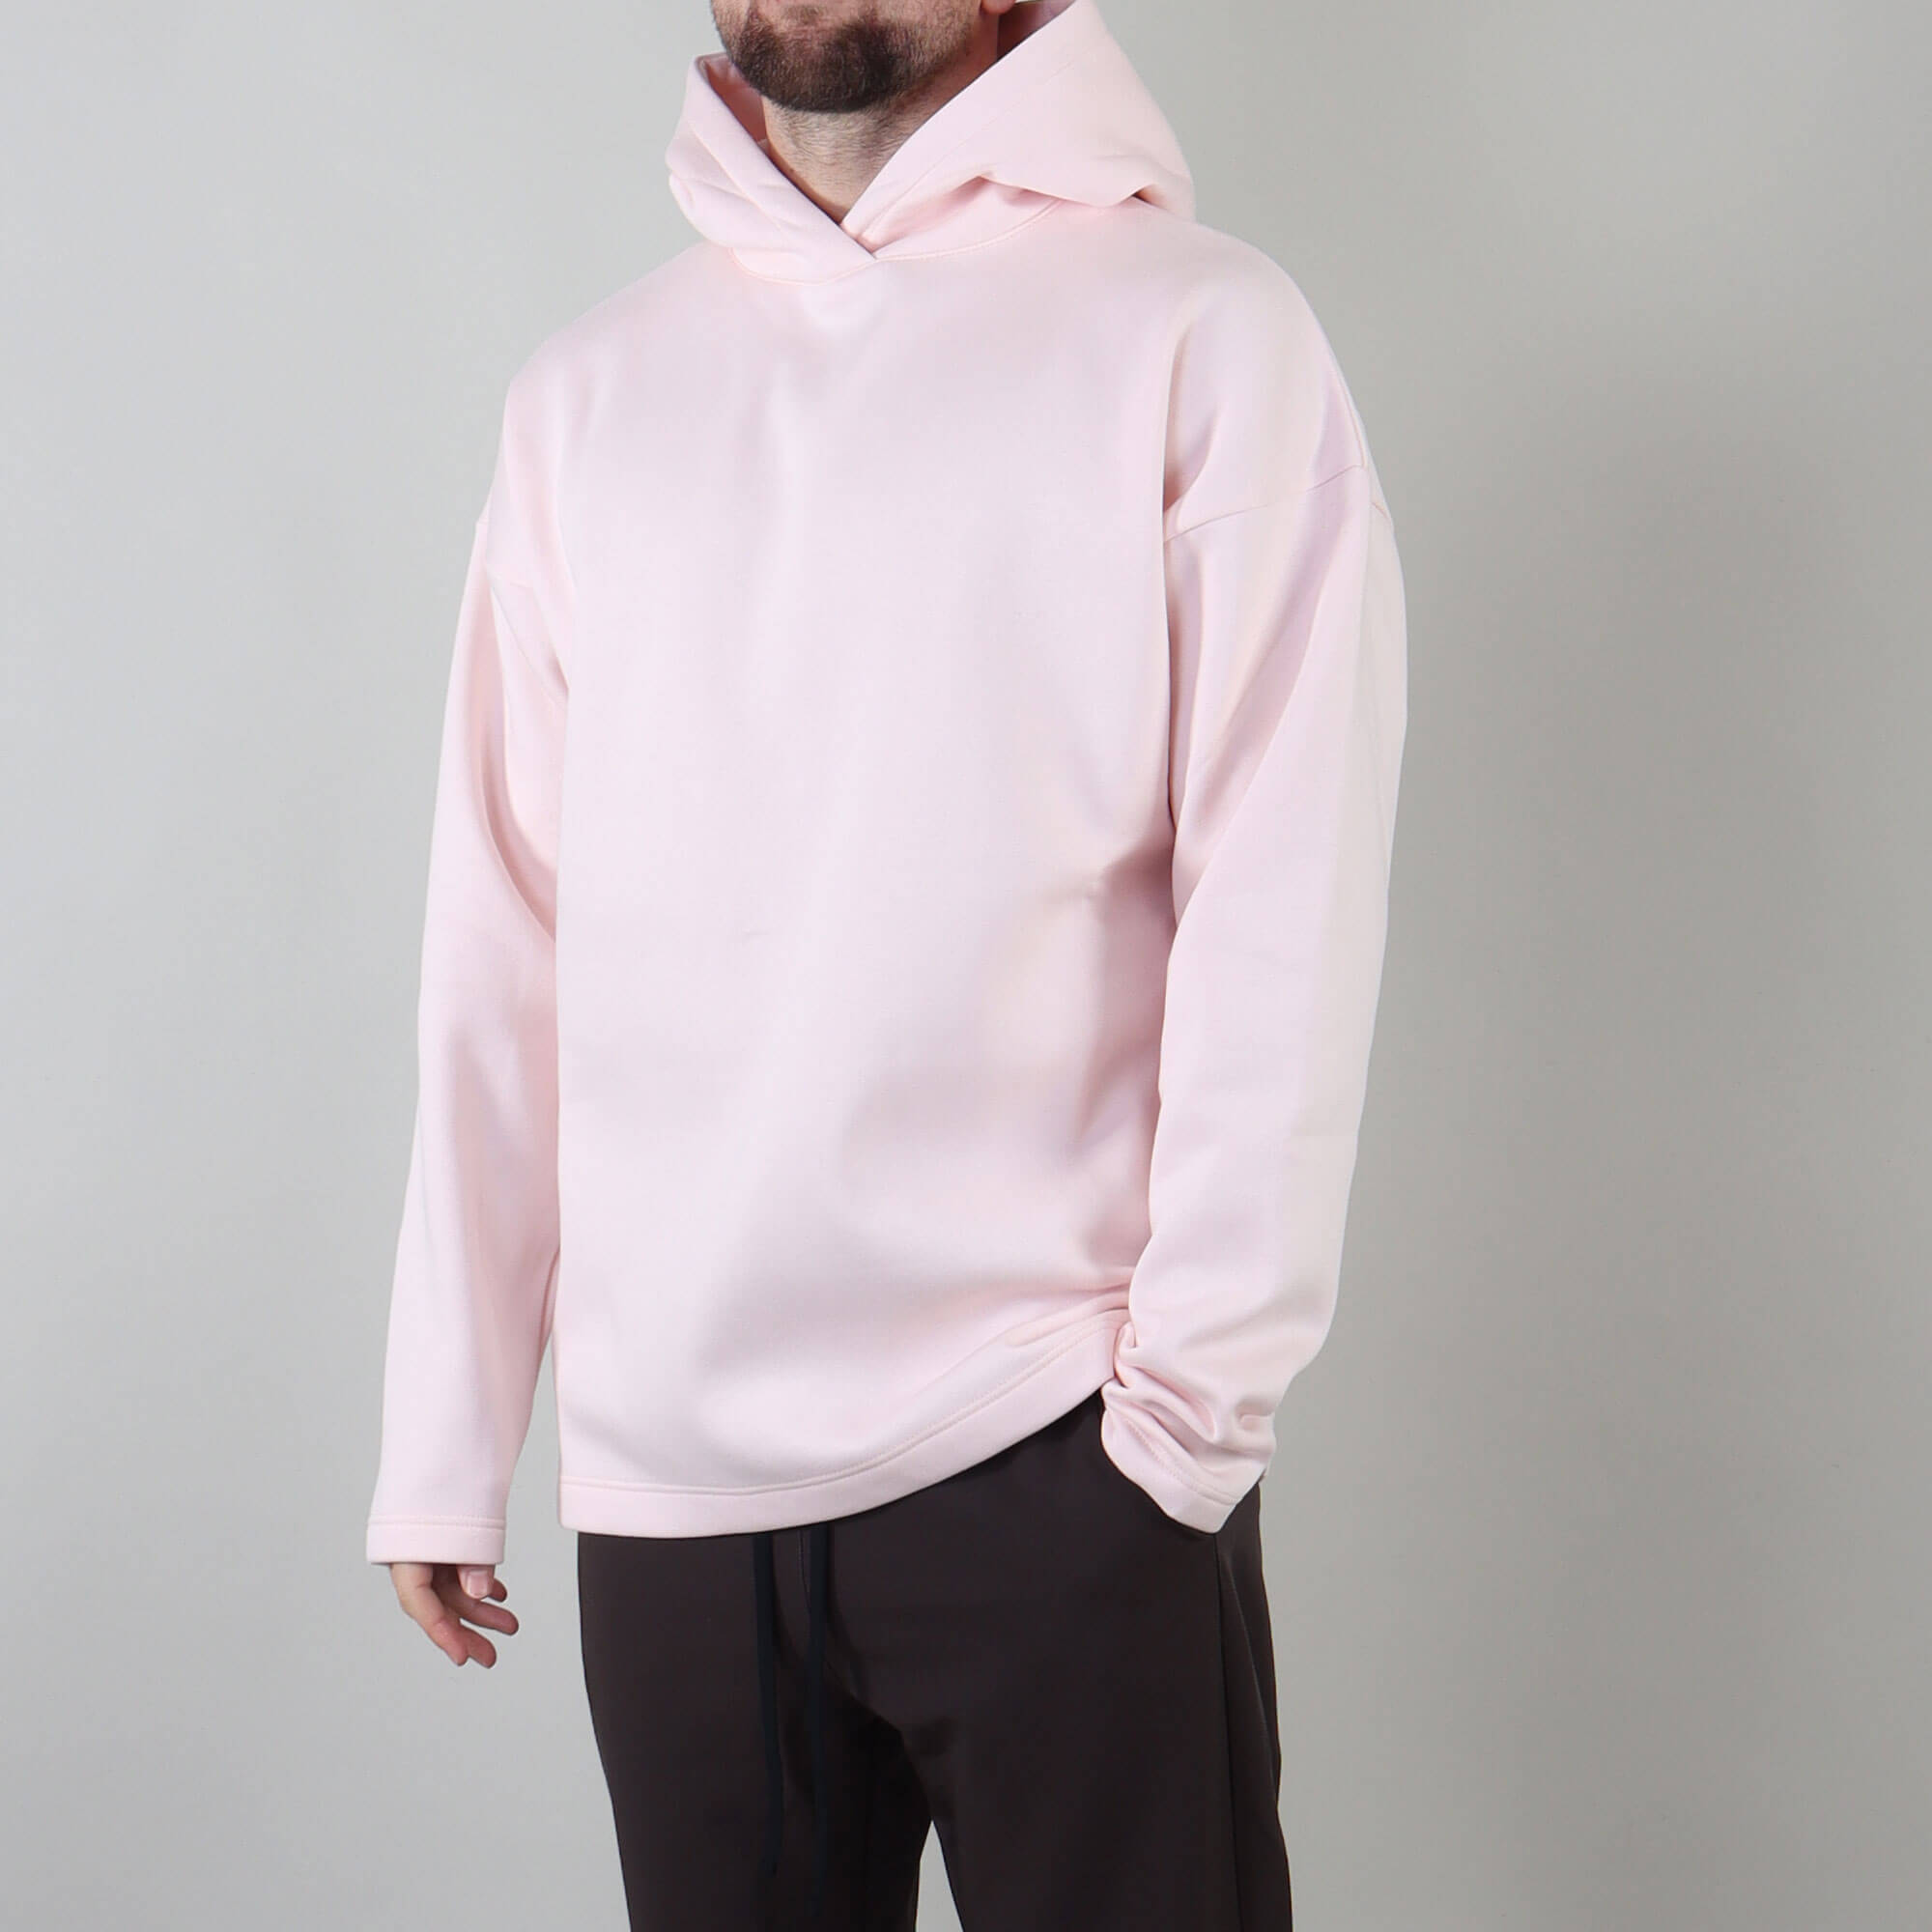 PRJCT hoodie baby pink